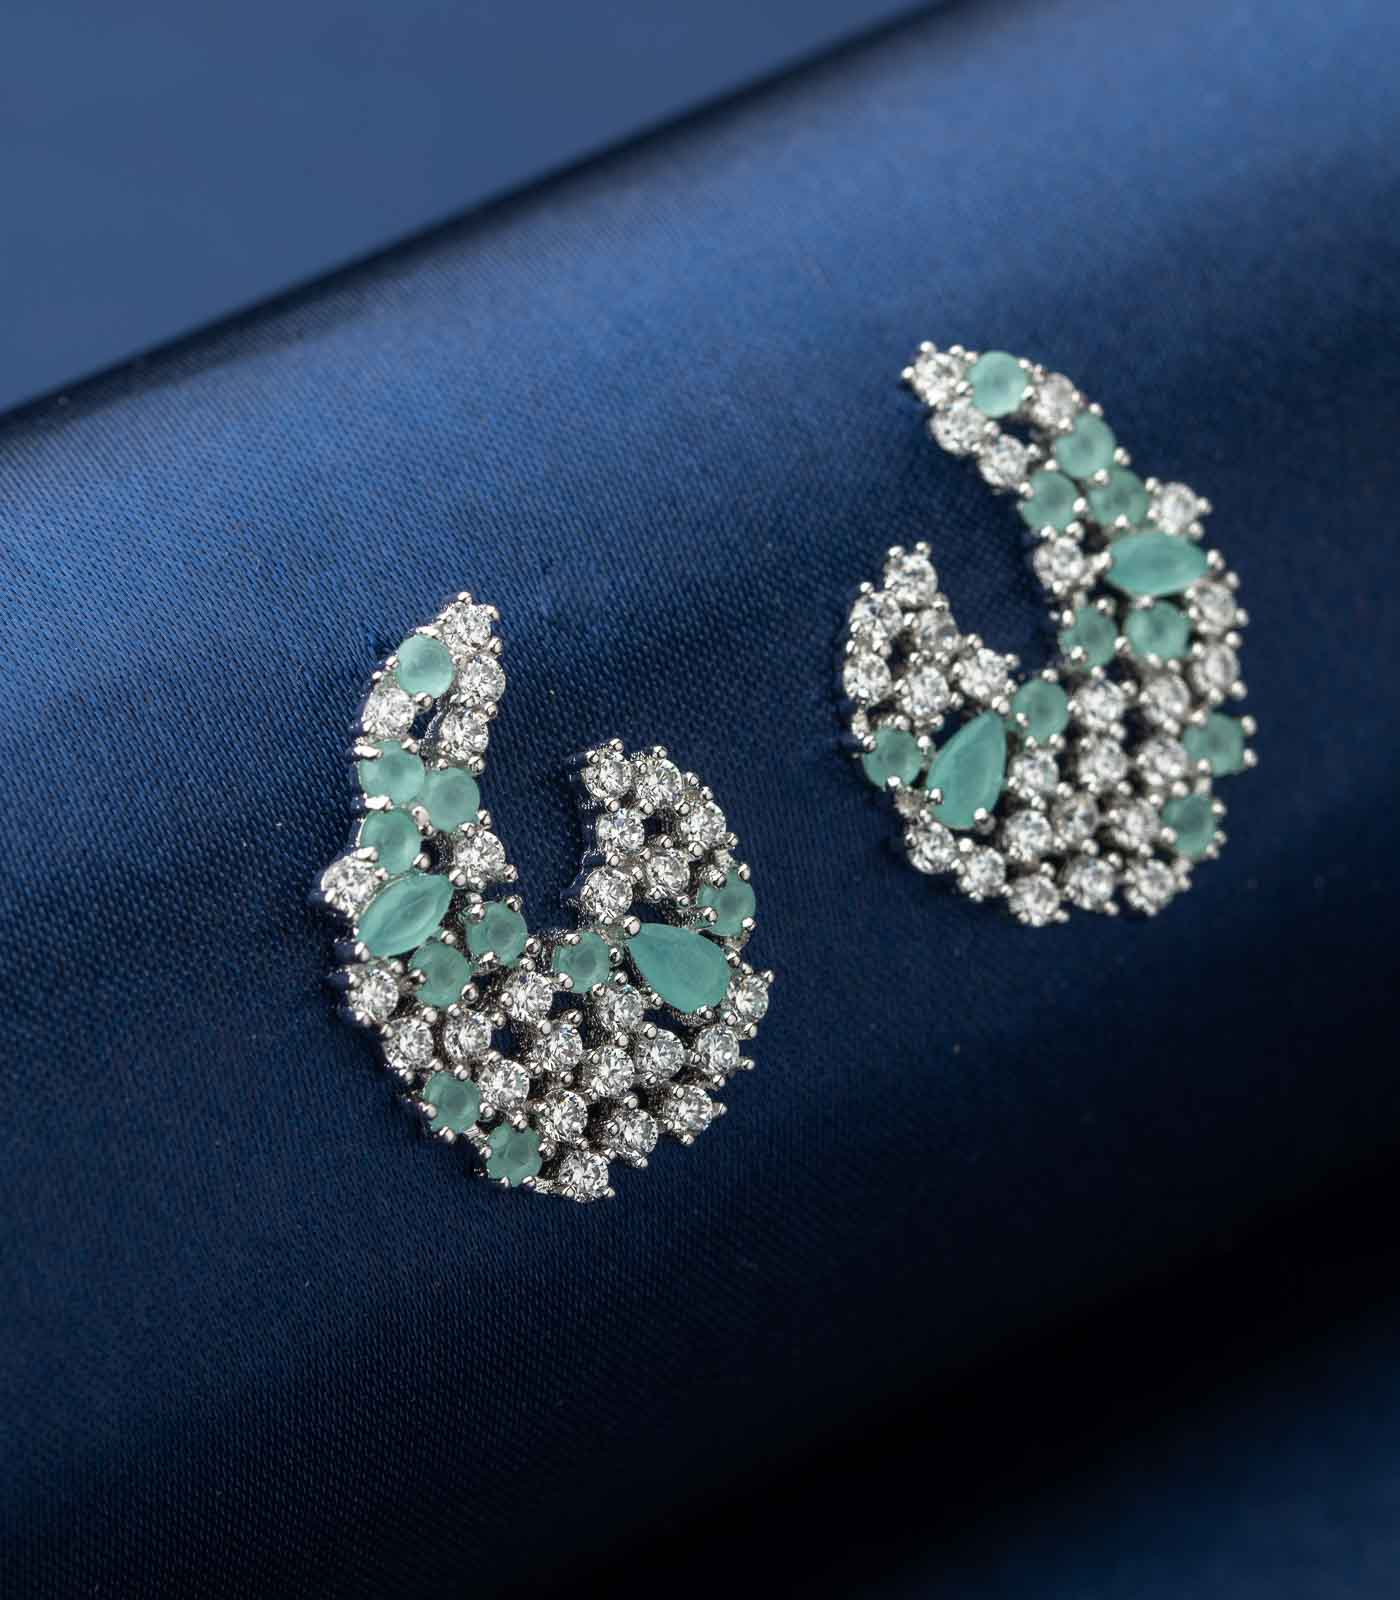 The Royal Aqua Earrings (Brass)